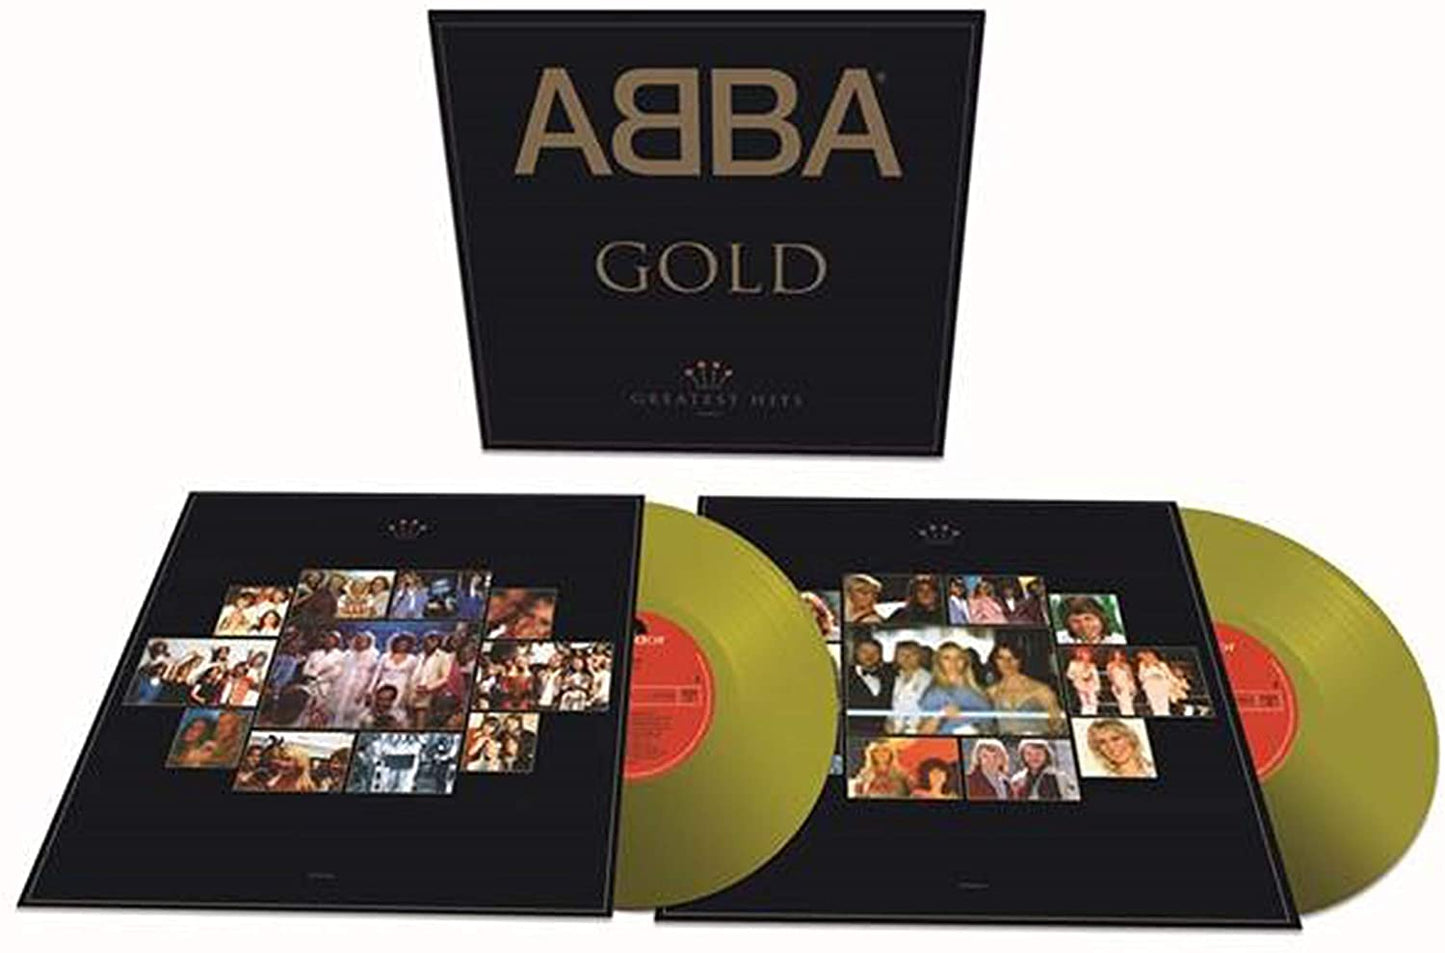 Abba Gold (Limited Gold Vinyl)